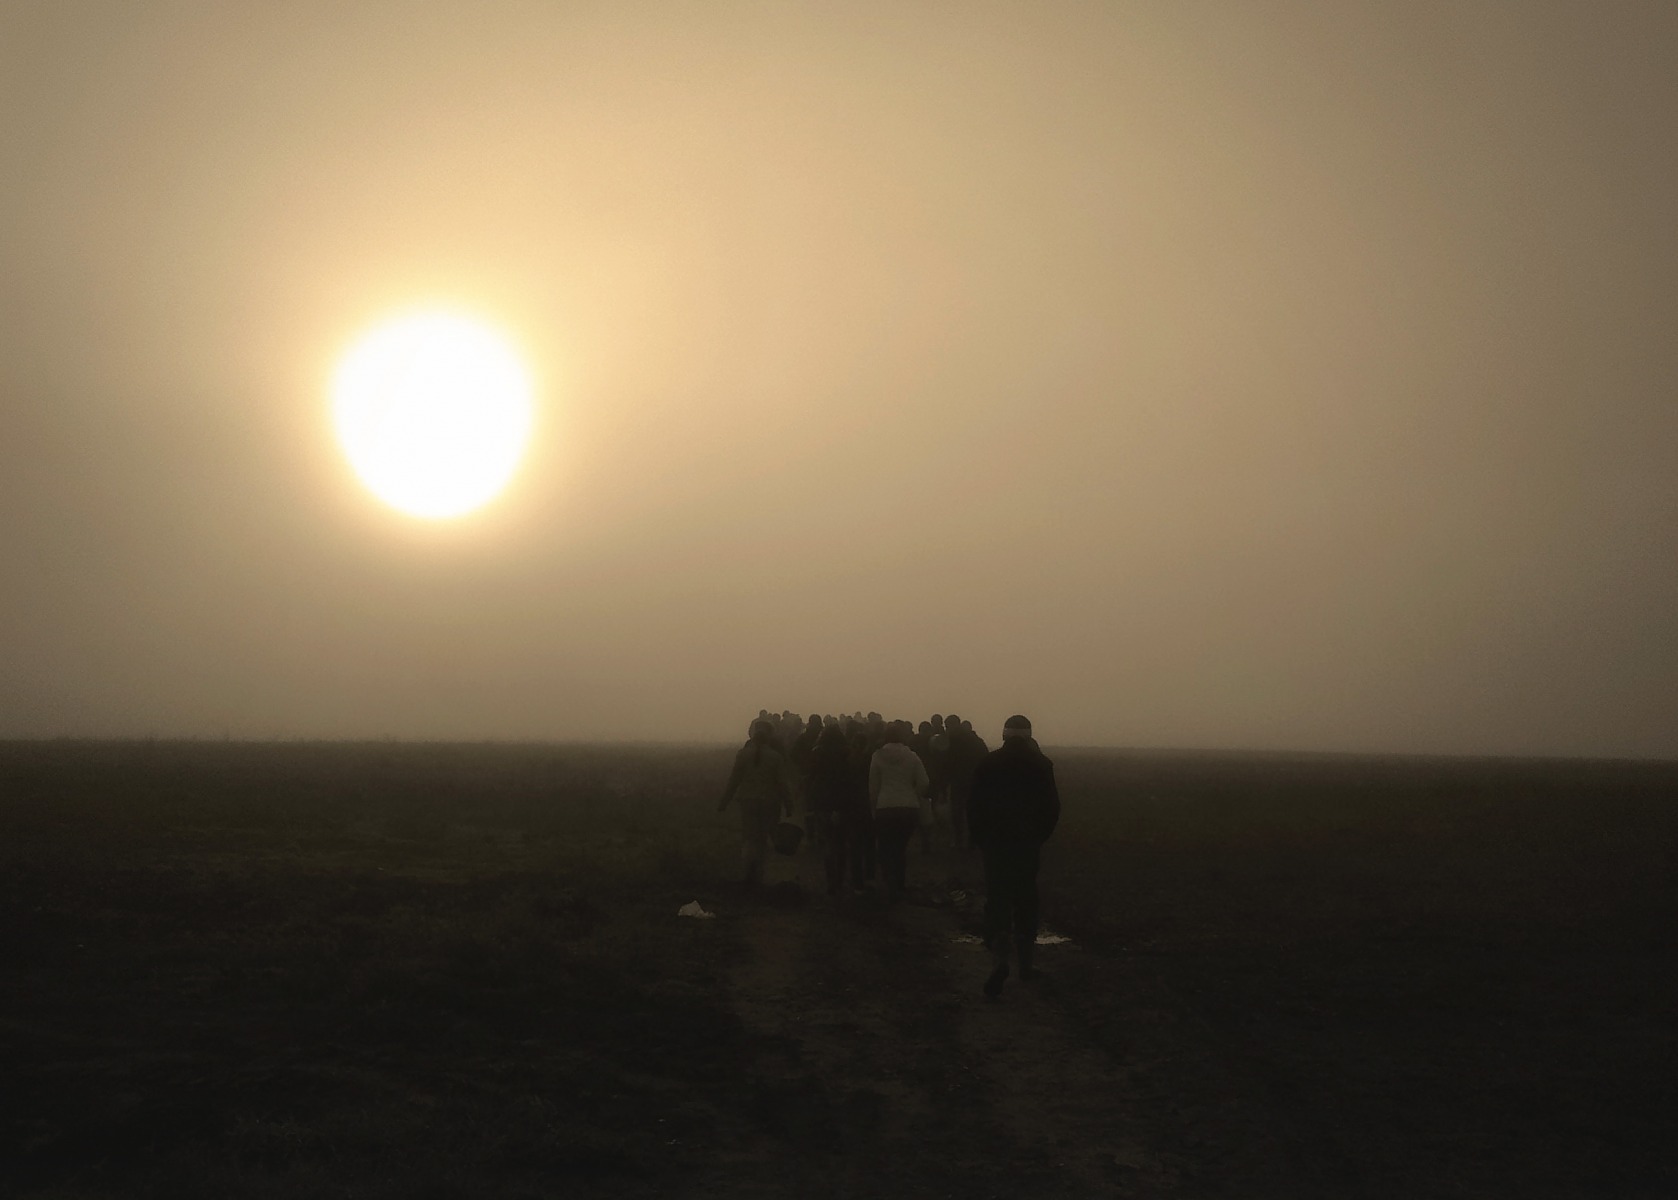 В утреннем тумане | Фотограф Михаил Климкович | foto.by фото.бай